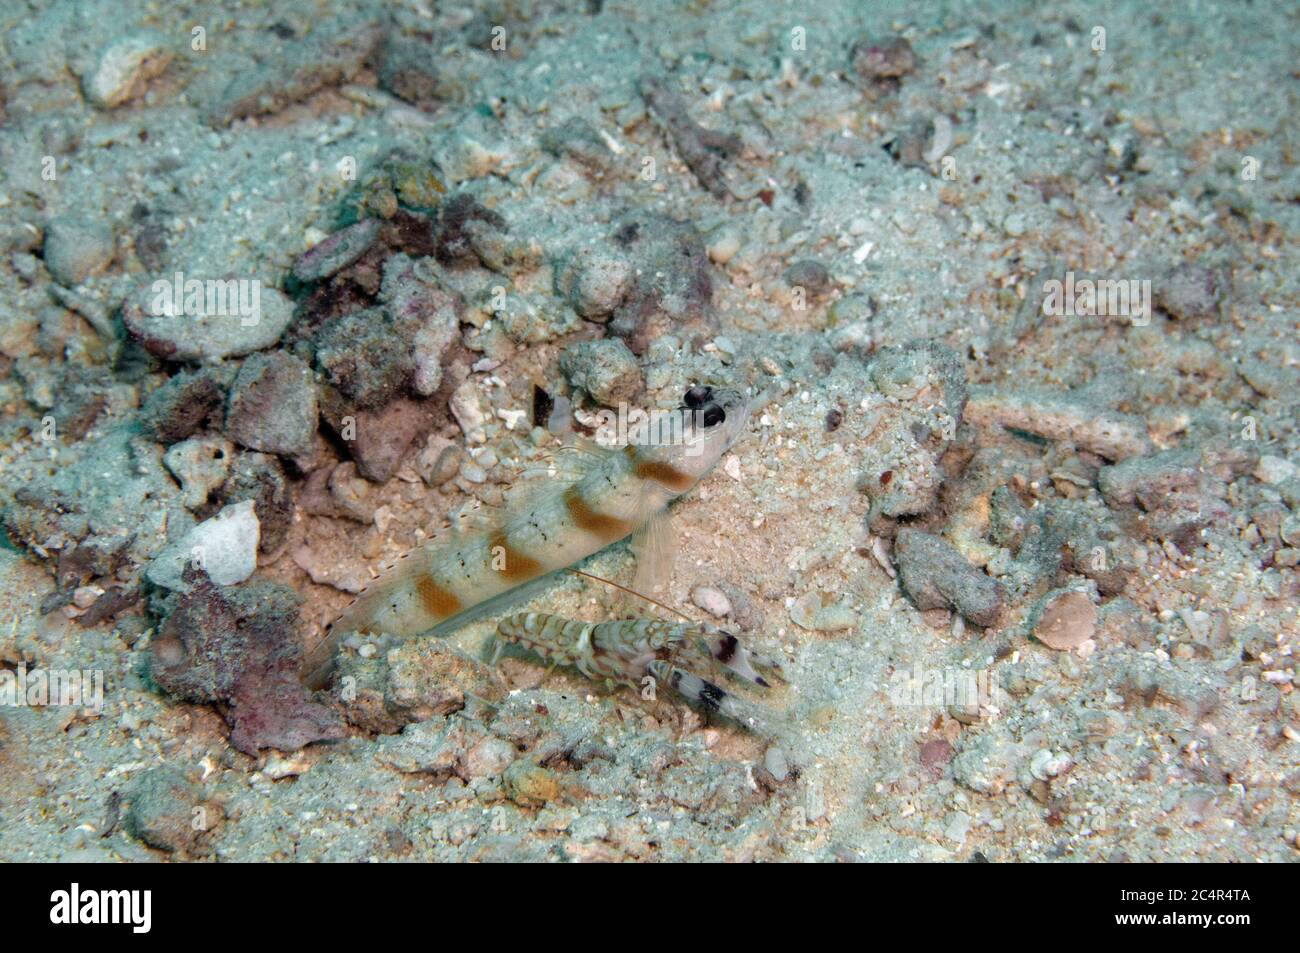 SteinitzÕ shrimpgoby, Amblyeleotris steinitzi, and a shrimp, Alpheus sp., Mabul Kapalai, Malaysia Stock Photo